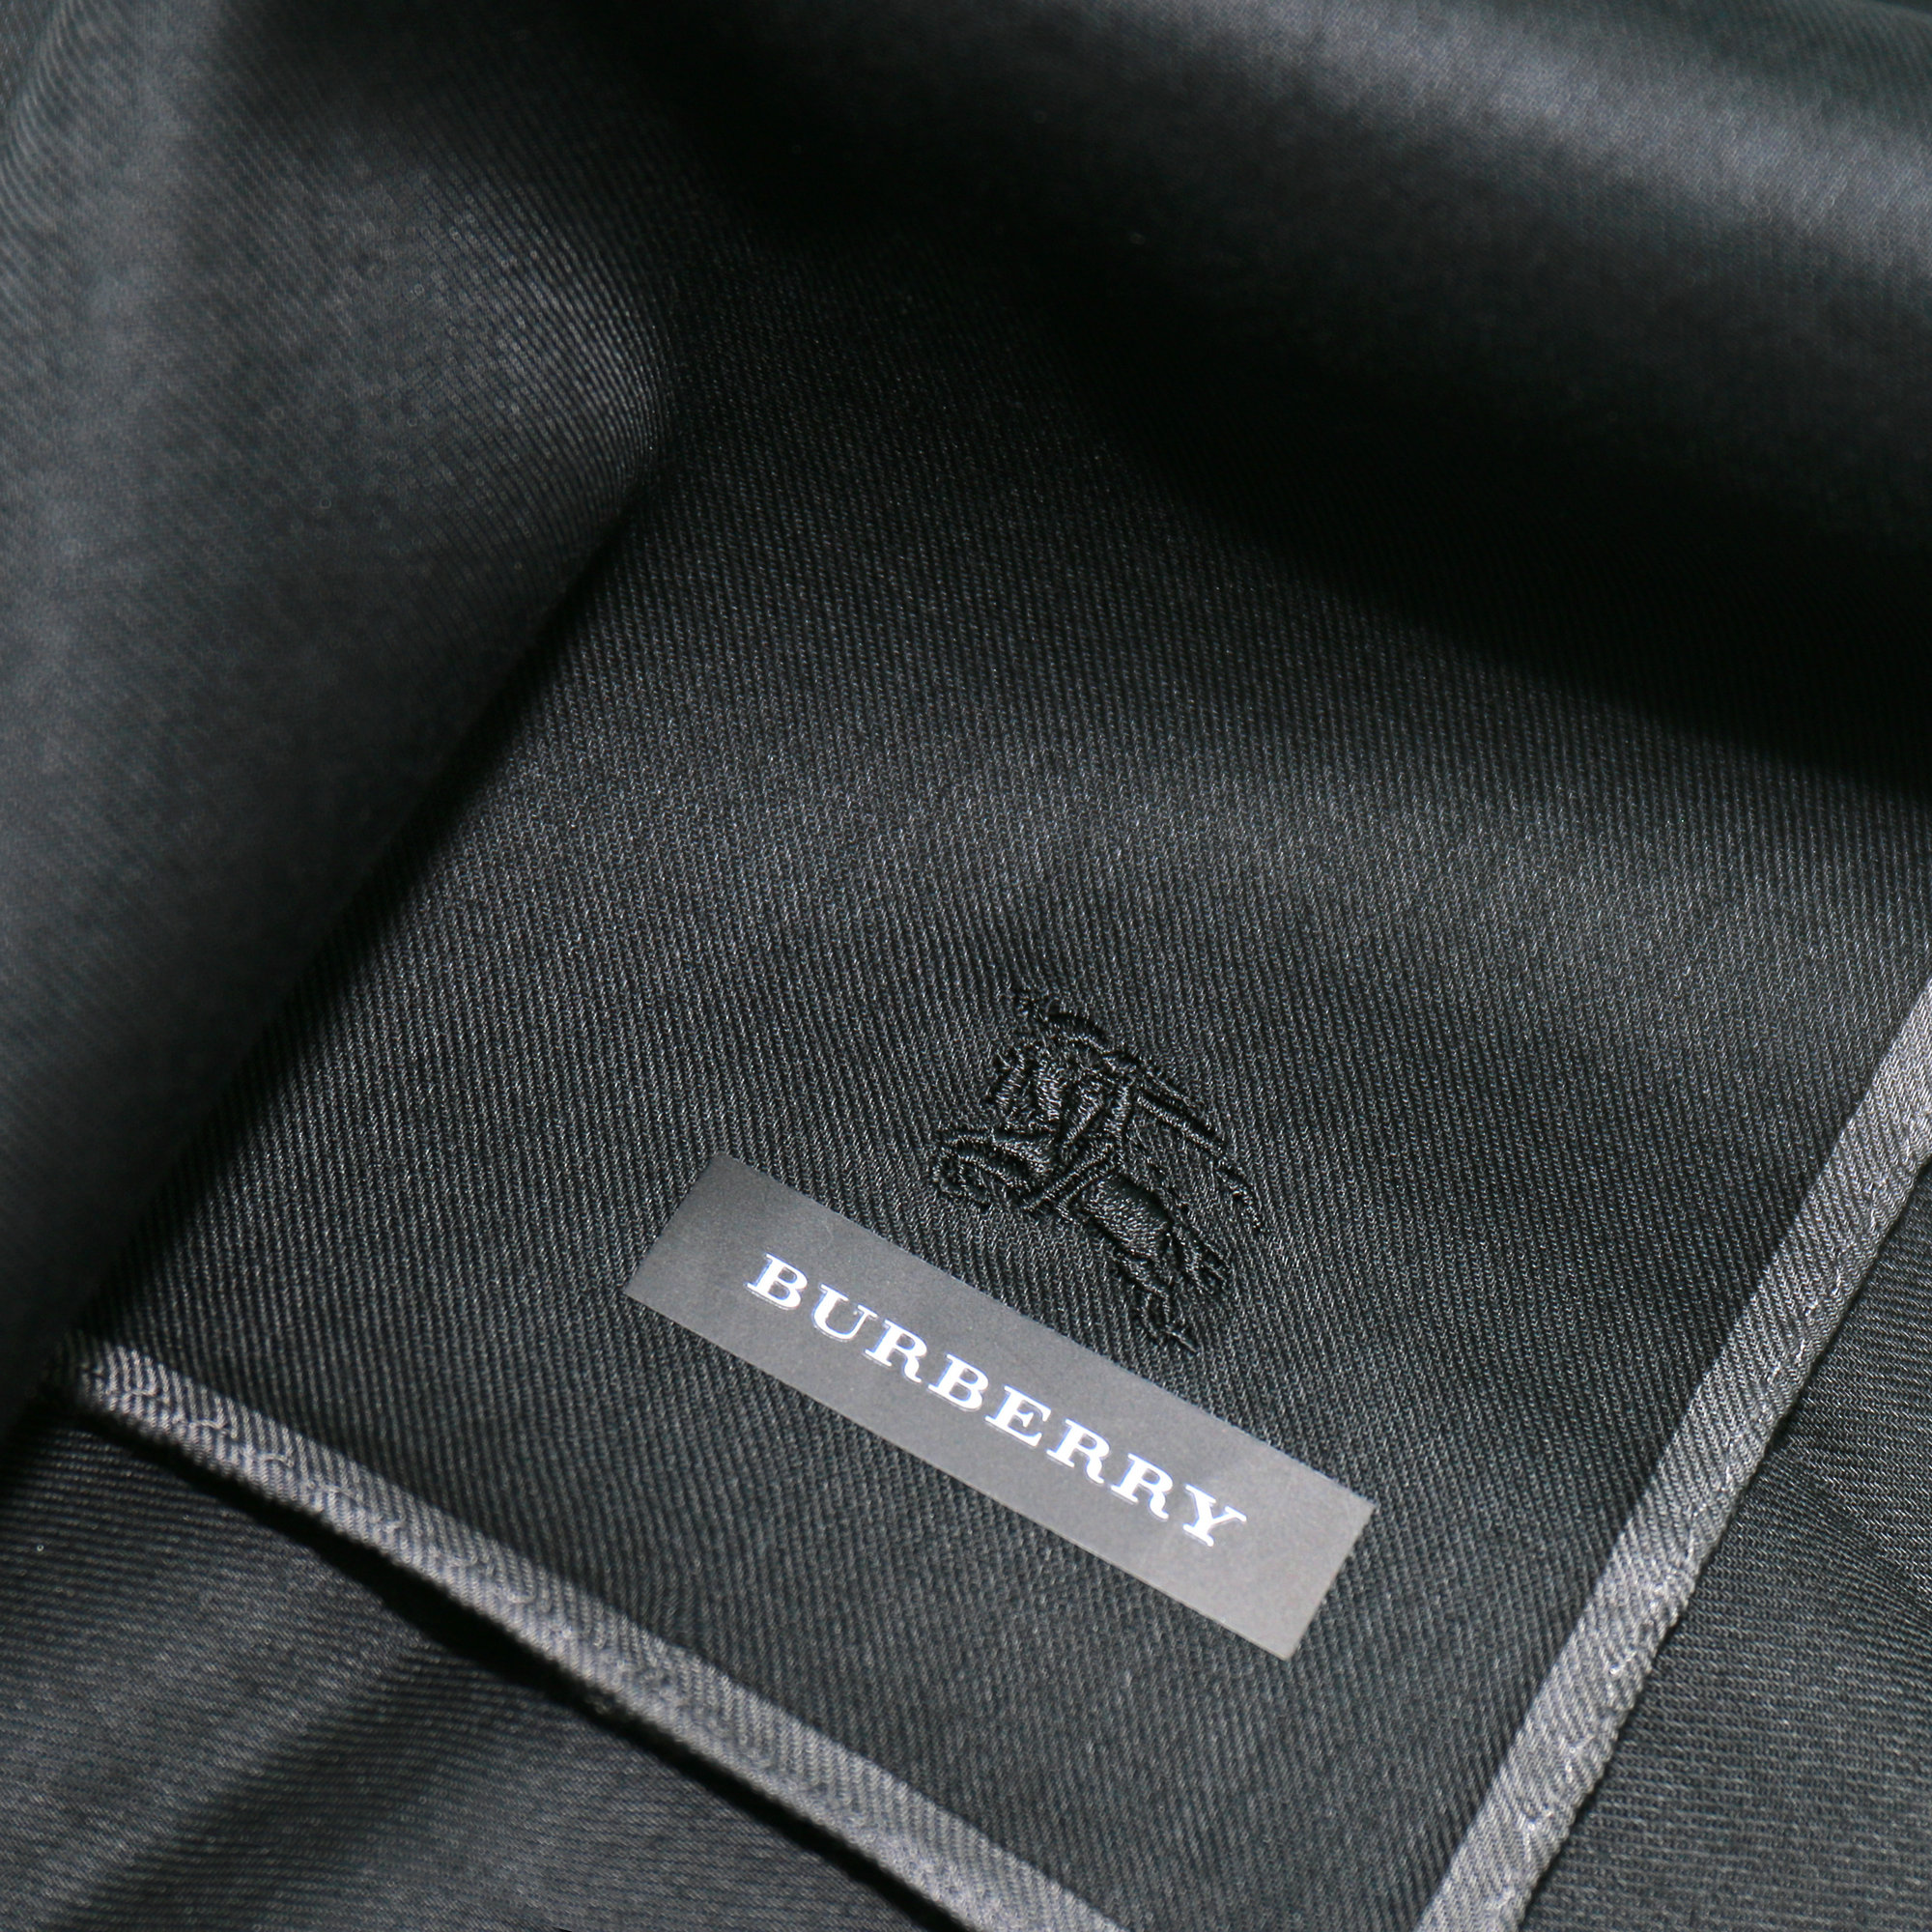 Burberry Handkerchief (Plain Grey ) - HANKII